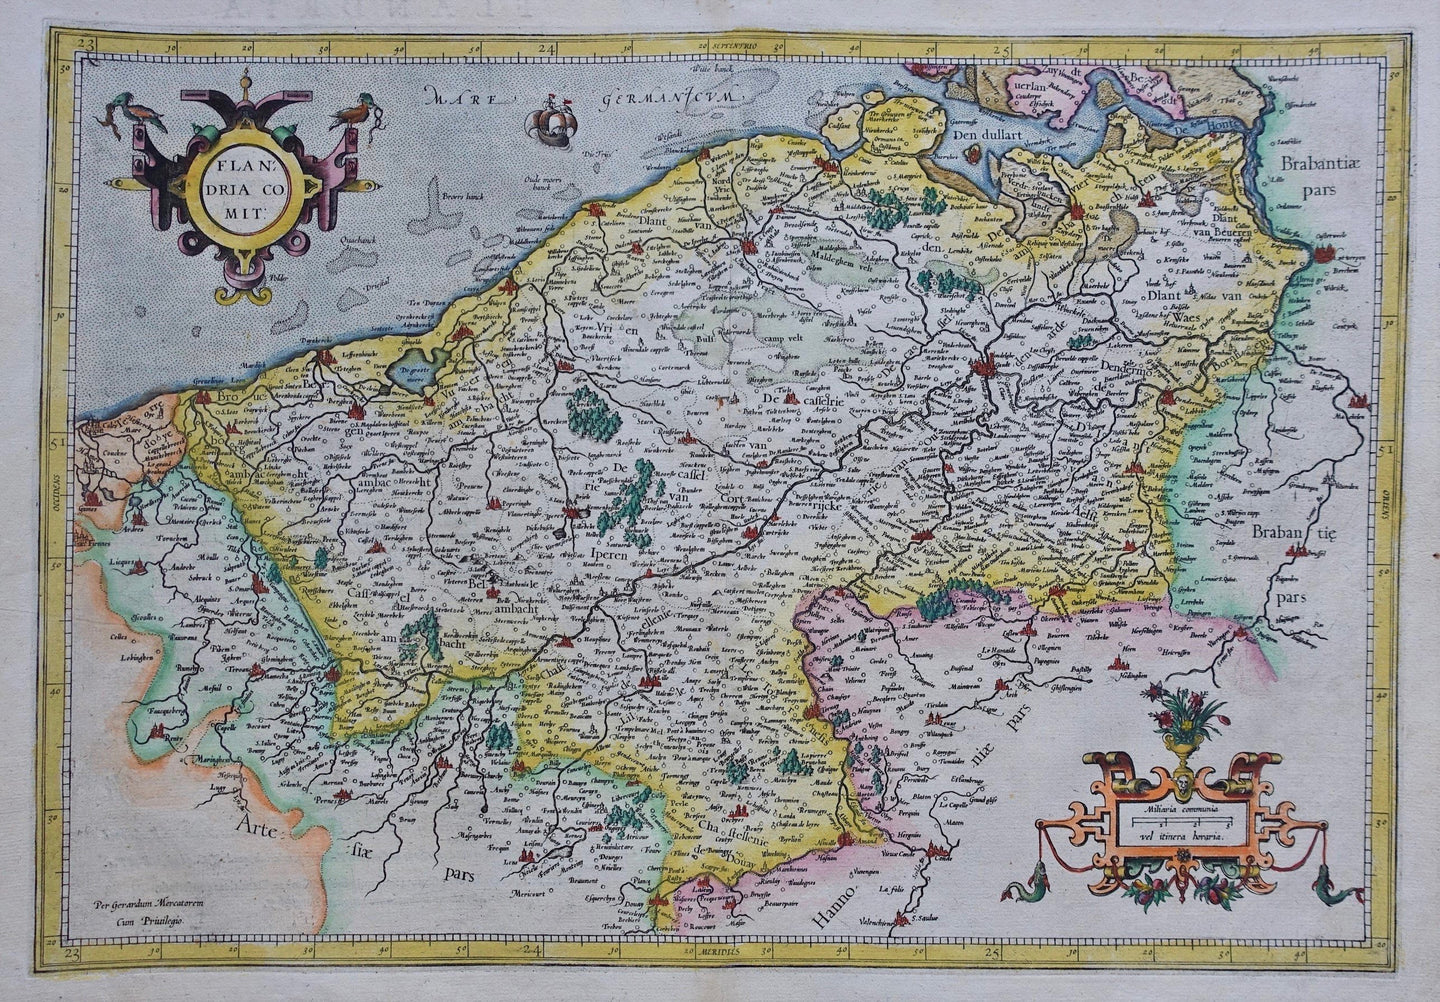 België Vlaanderen Belgium Flanders - G Mercator / J Hondius - circa 1613